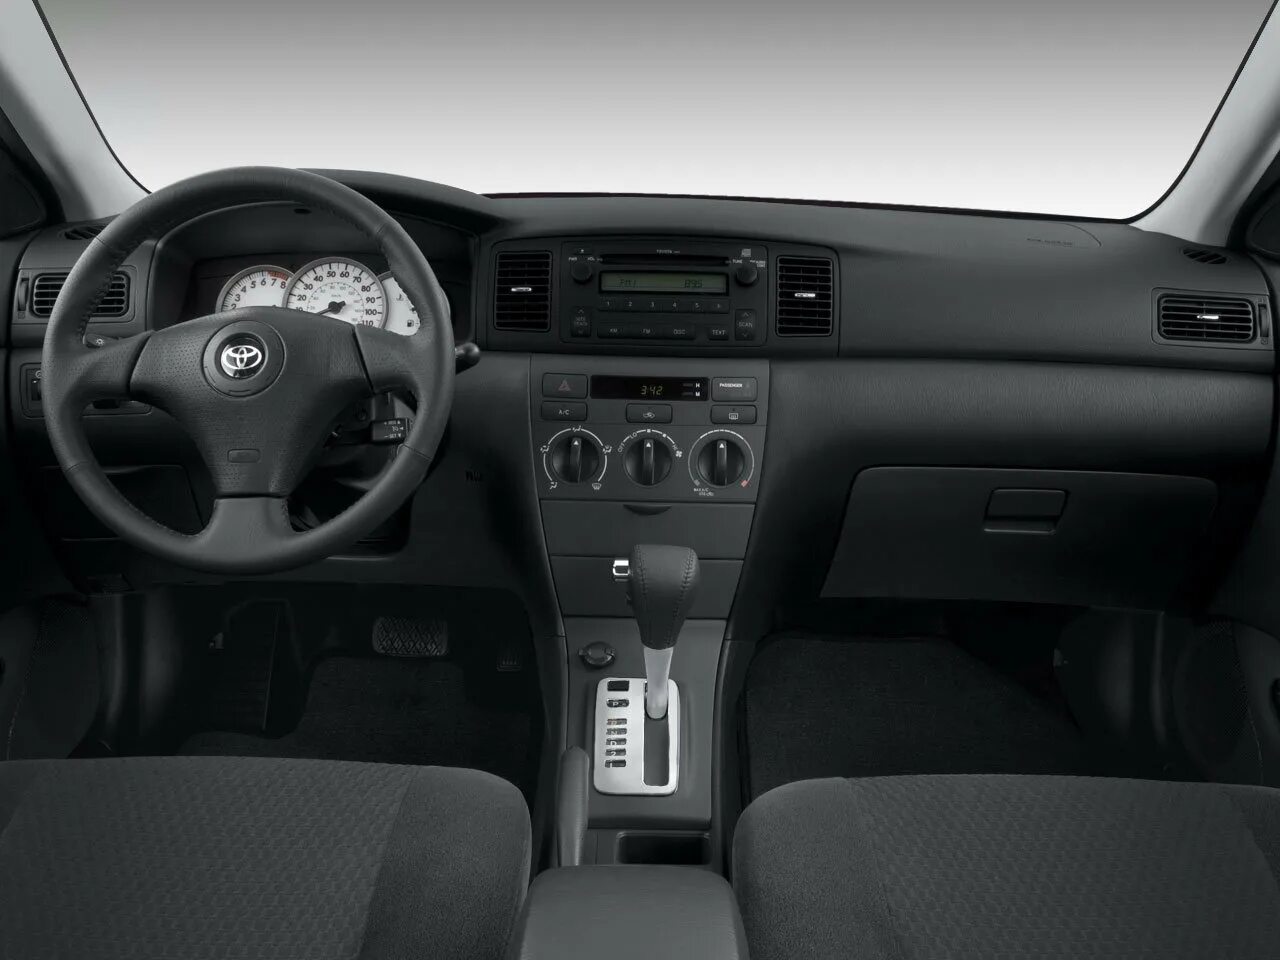 Торпеда 2004. Toyota Corolla 2006 Торпедо. Toyota Corolla e120 Interior. Тойота Королла 2002 внутри. Toyota Corolla e120 седан салон.